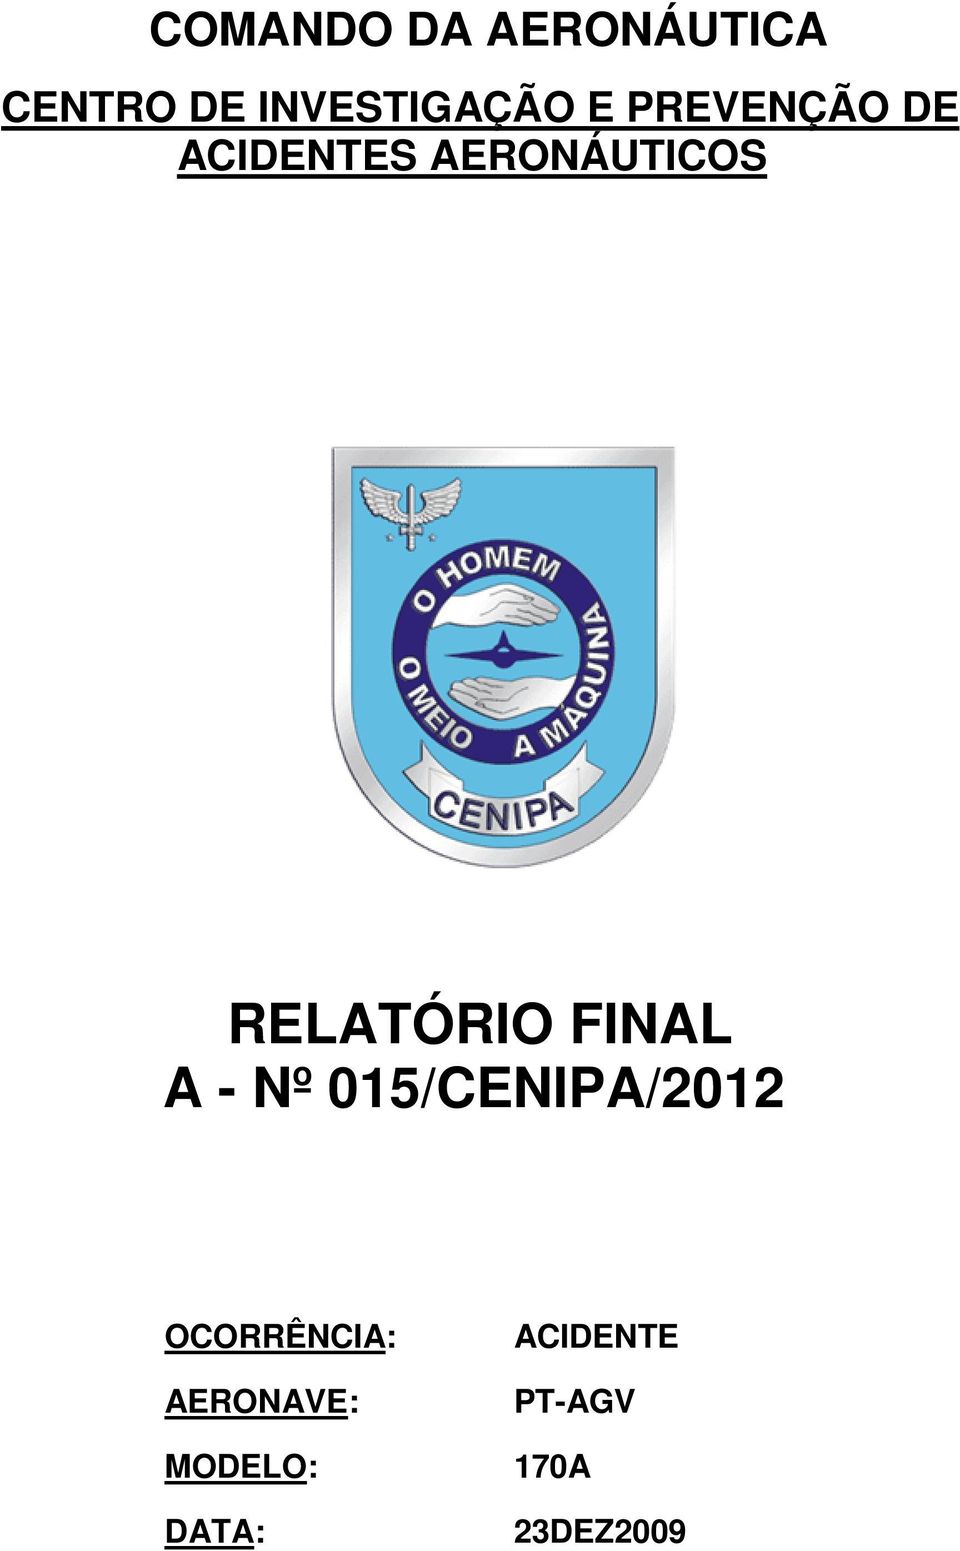 FINAL A - Nº 015/CENIPA/2012 OCORRÊNCIA: